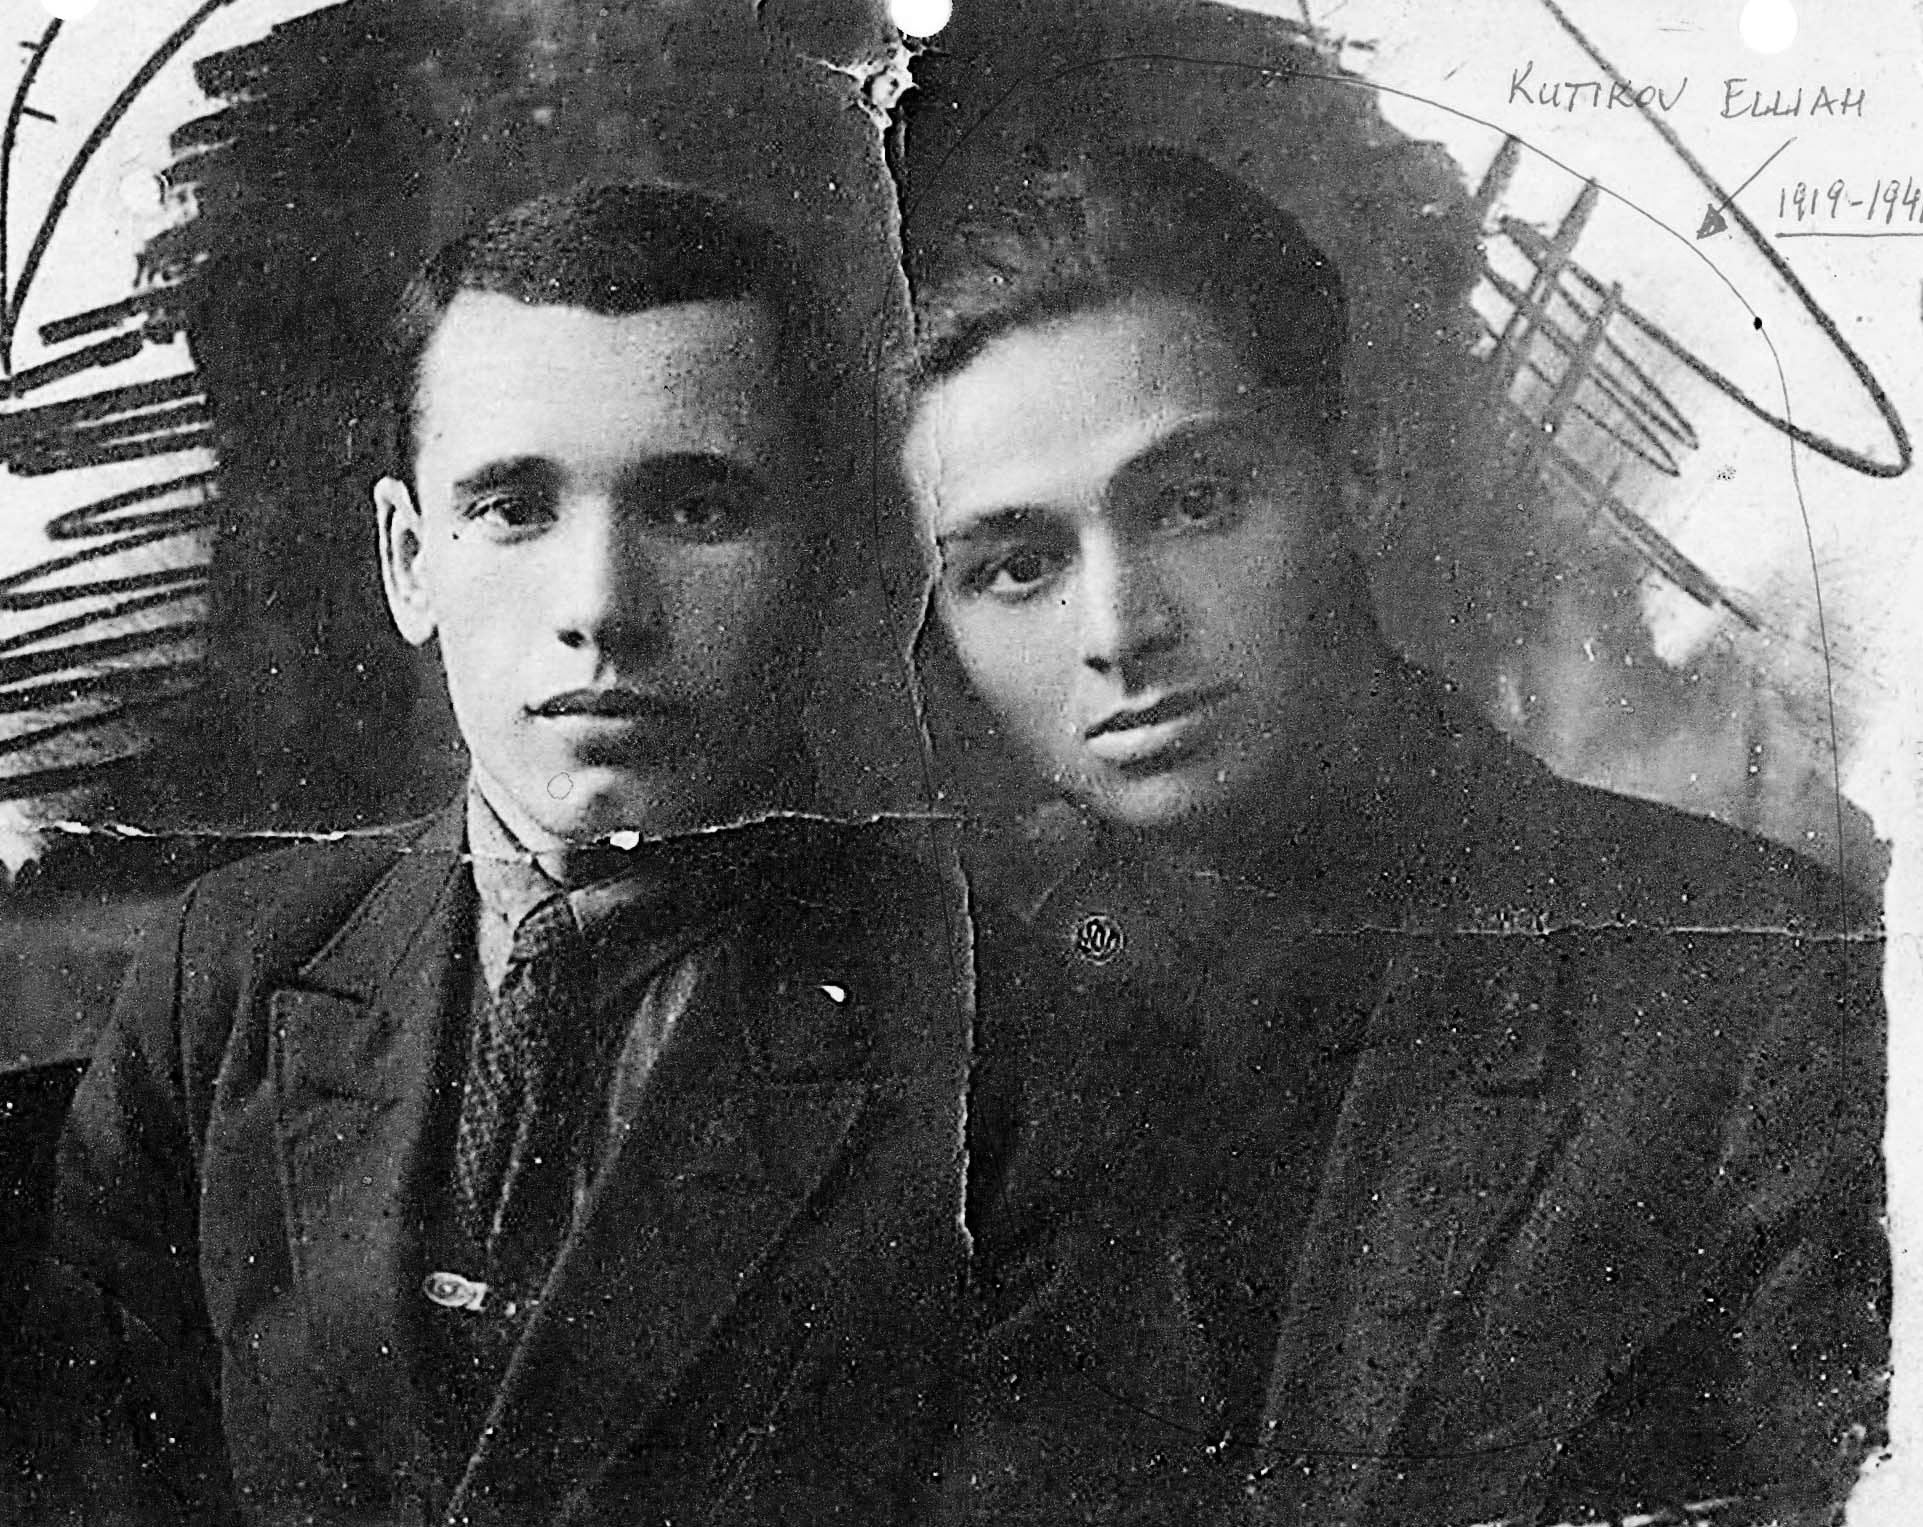 Ellijah Kutikov was born in Kiev, Ukraine, in 1919. He was murdered in 1941 at Babi Yar.